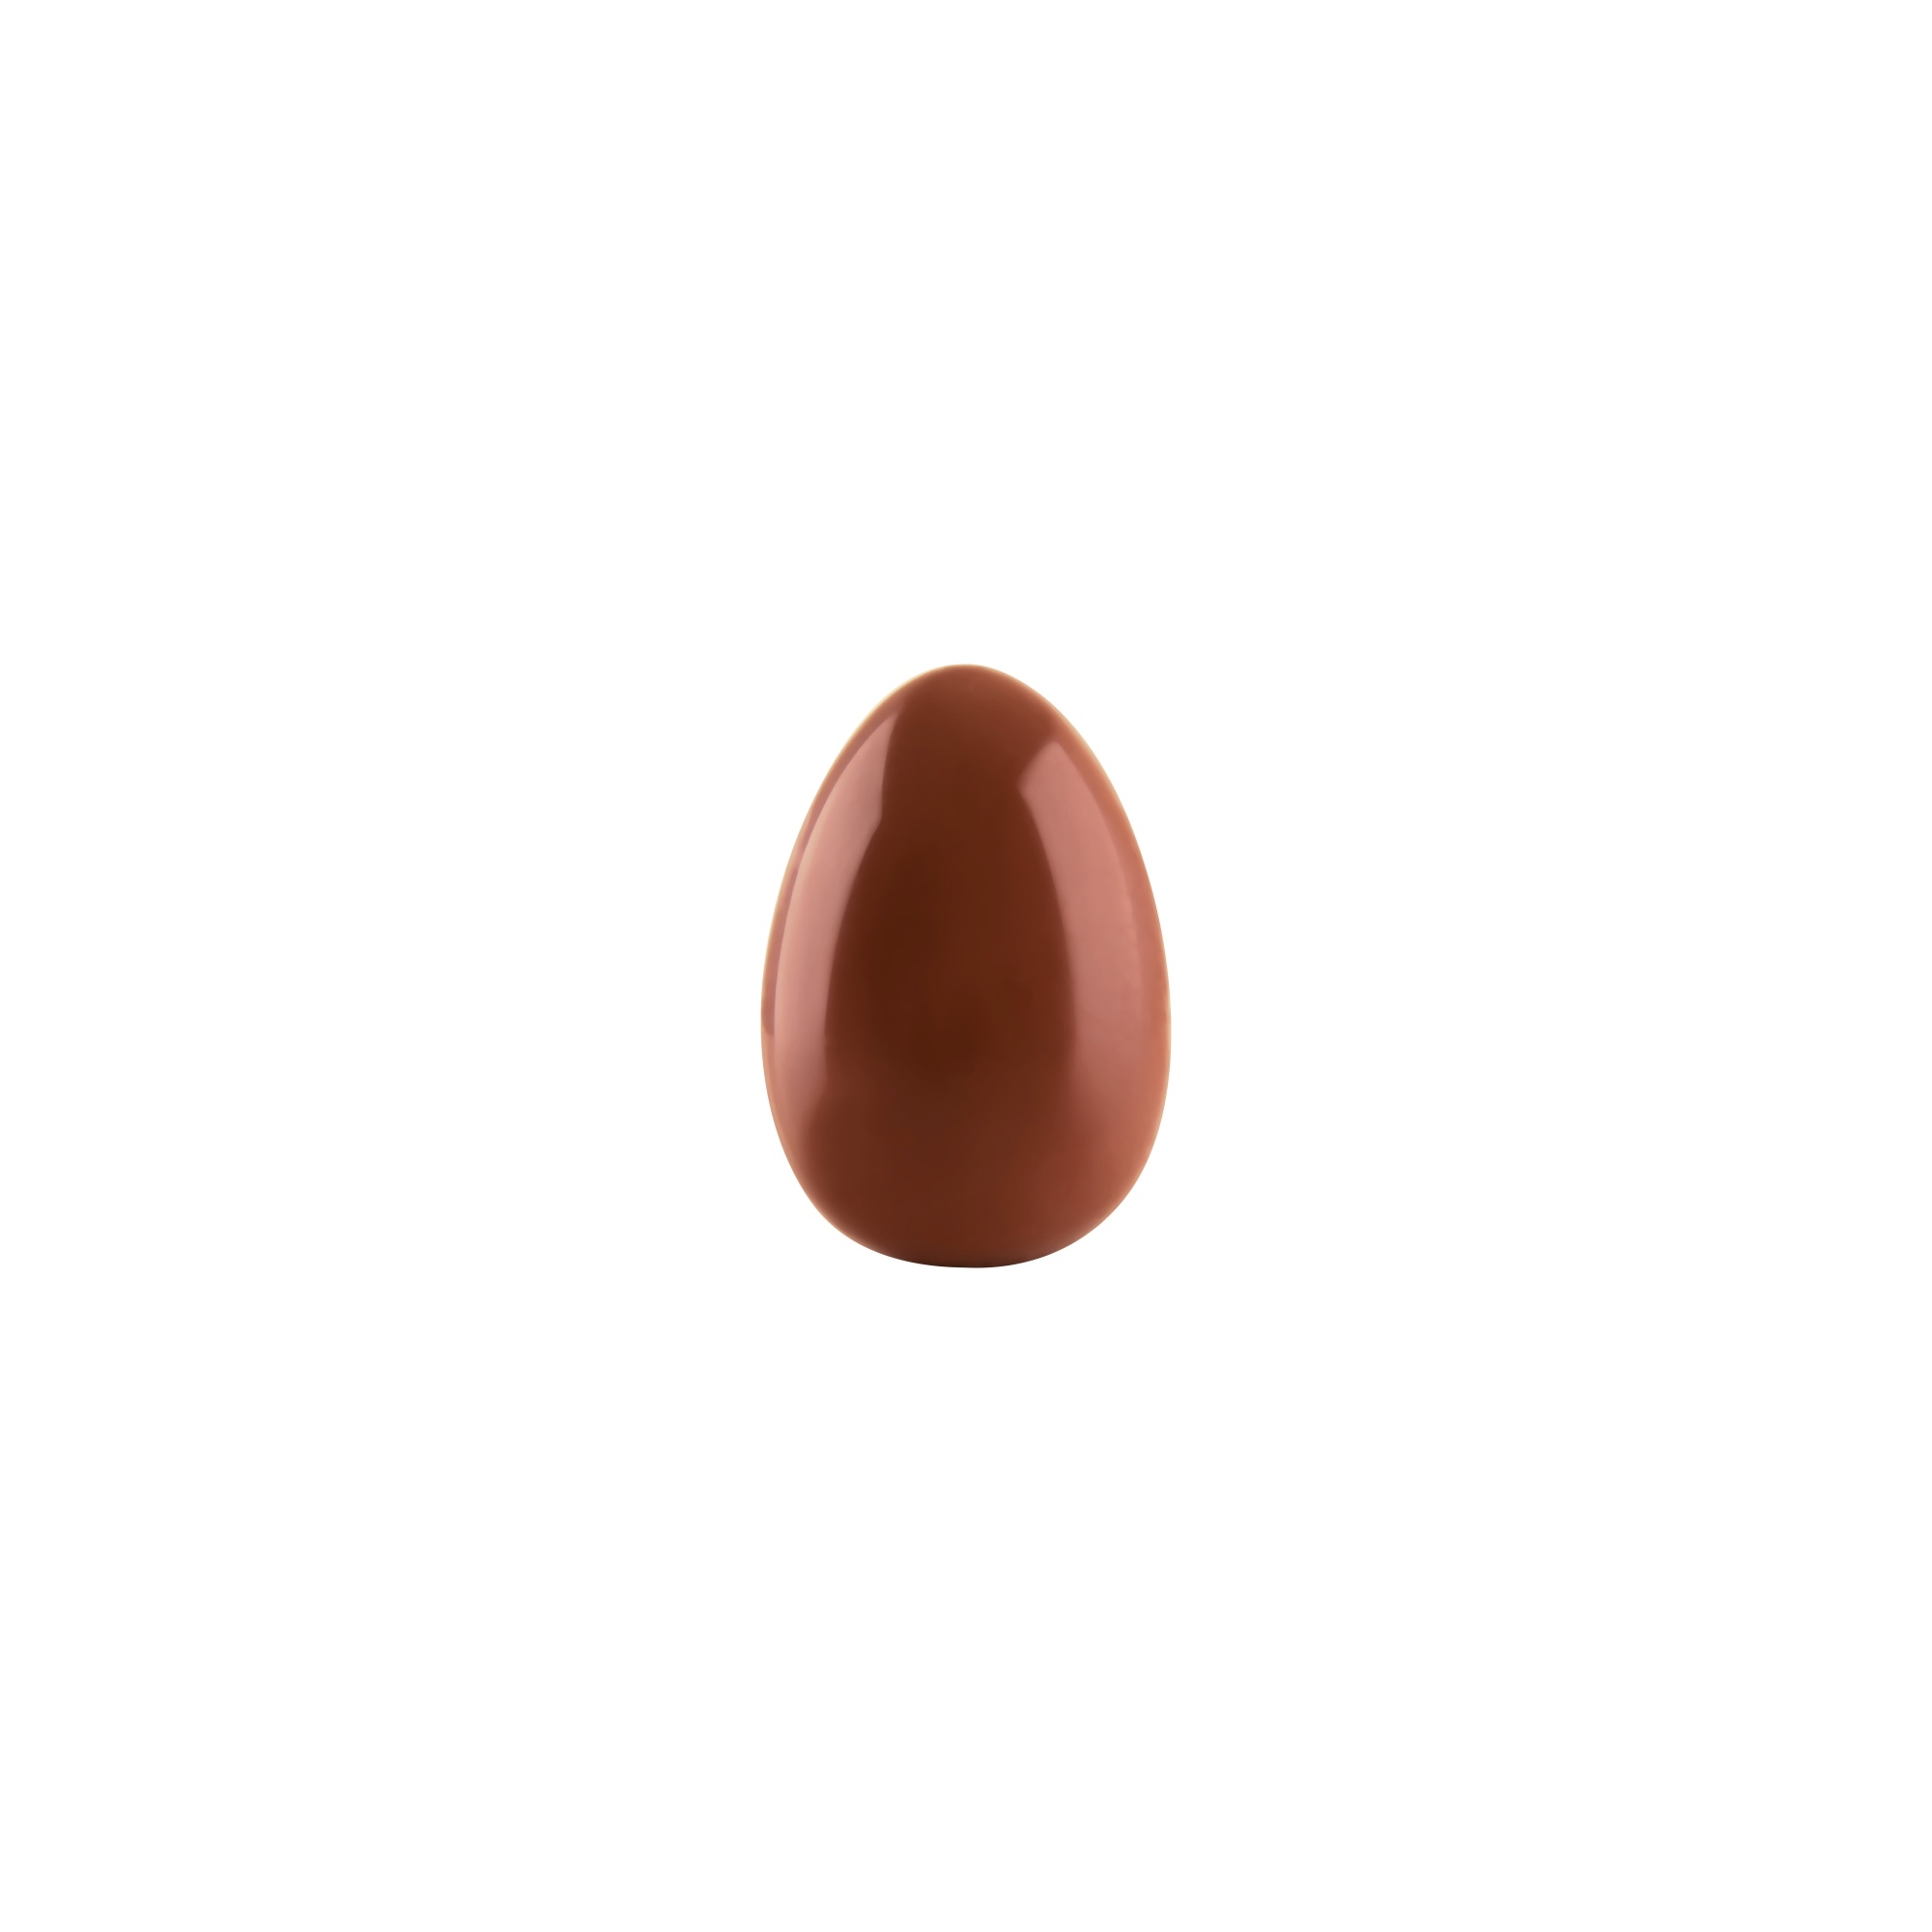 Форма для шоколада «Яйцо» поликарбонатная 20U032N, 32 ячейки, 3,2x2,2 см, Martellato, Италия  | Фото — Магазин Andy Chef  1